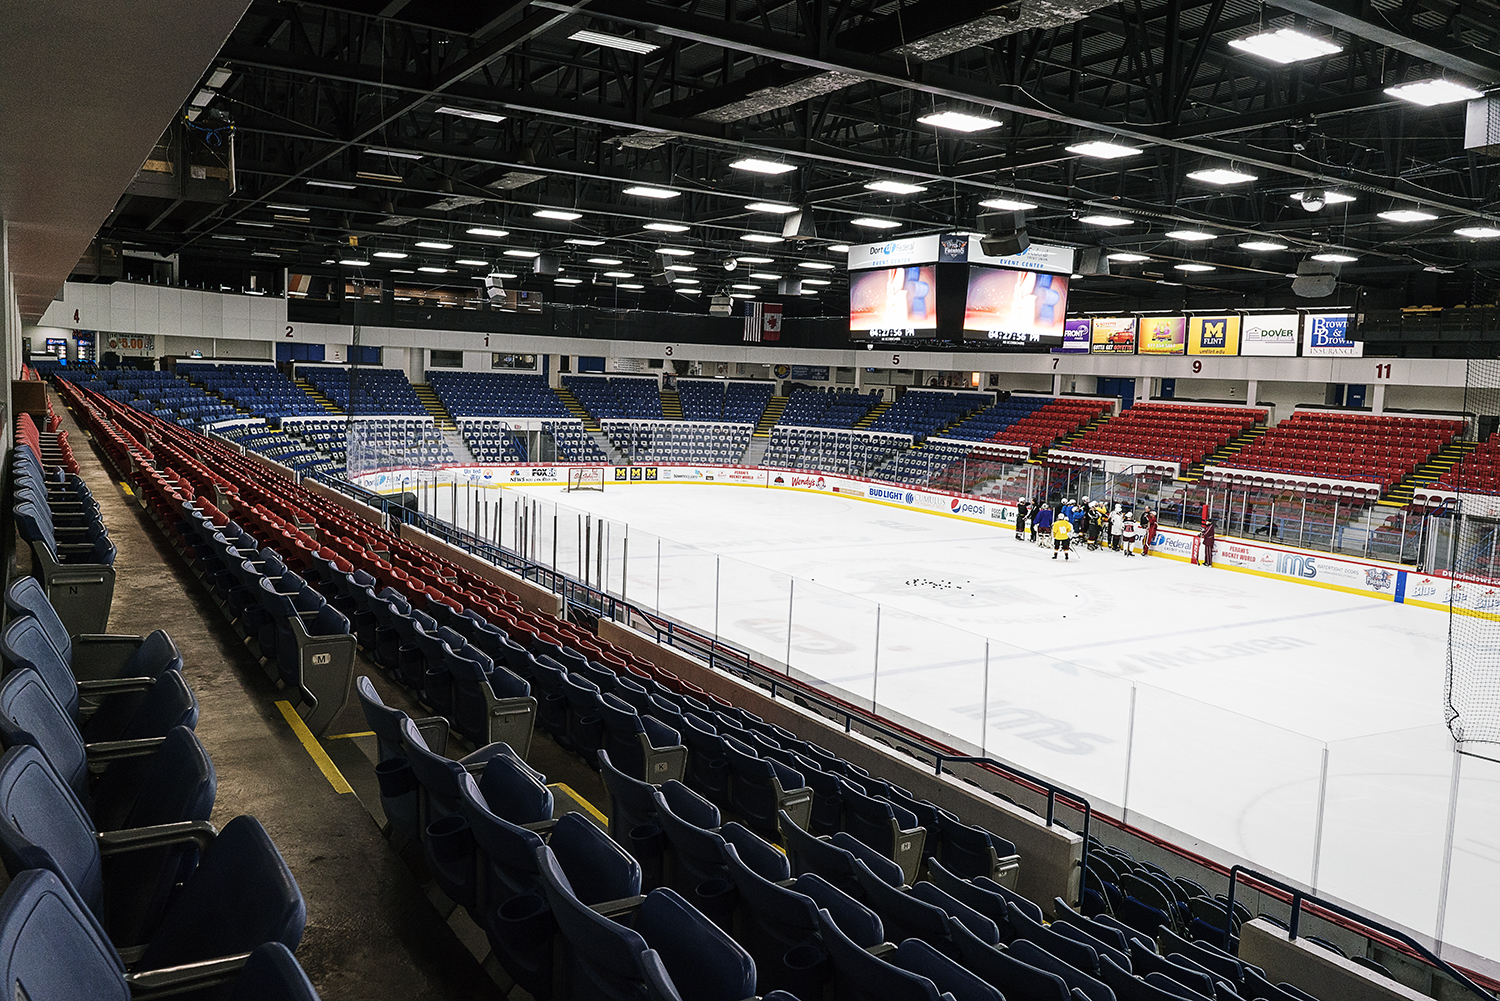 Flint, MI - Tuesday, January 30, 2018: The Davison High hockey team practices on the ice at the Dort Federal Event Center.